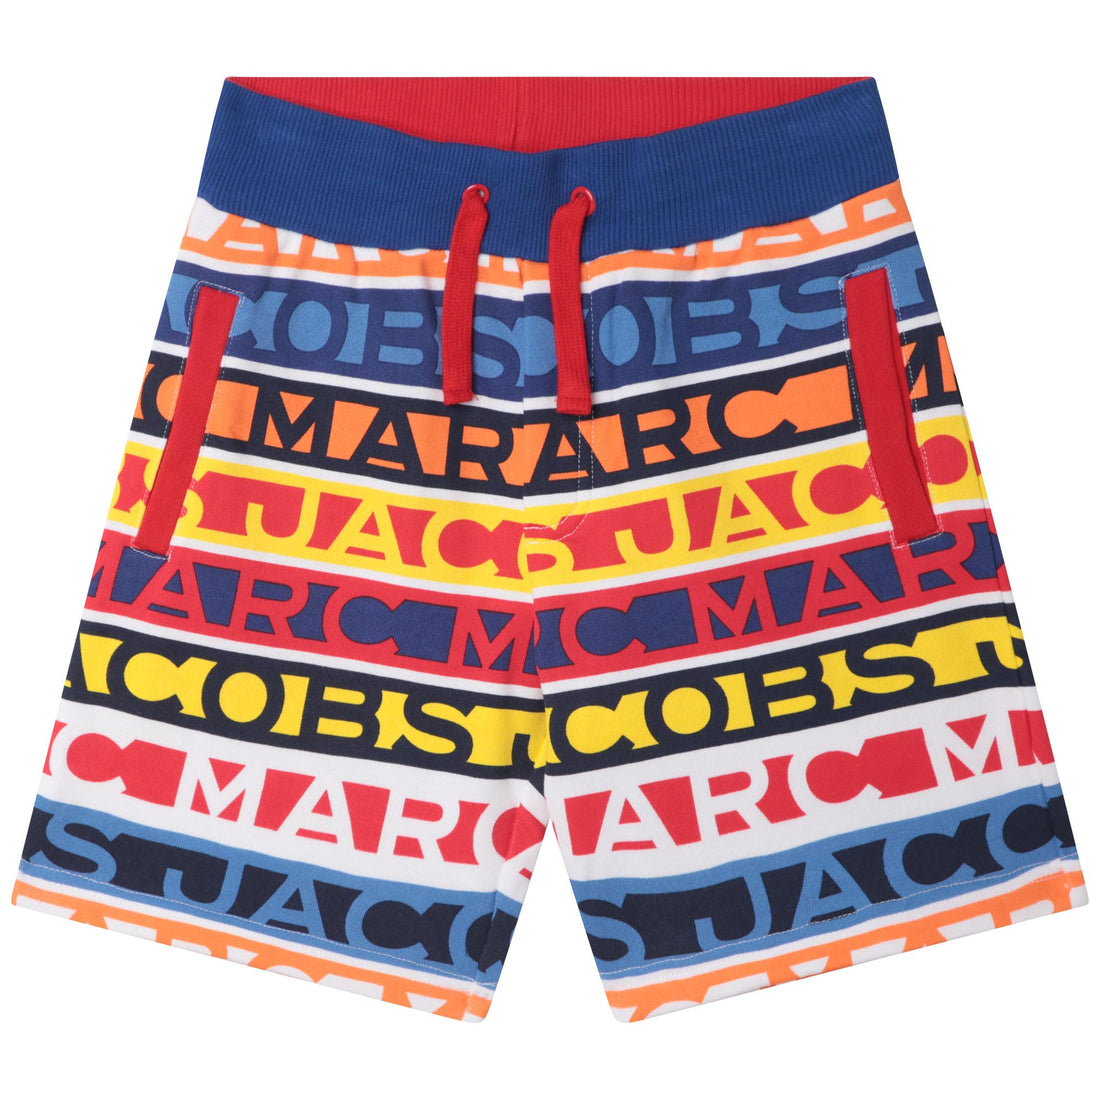 Marc Jacobs Bermuda Shorts Style: W24276